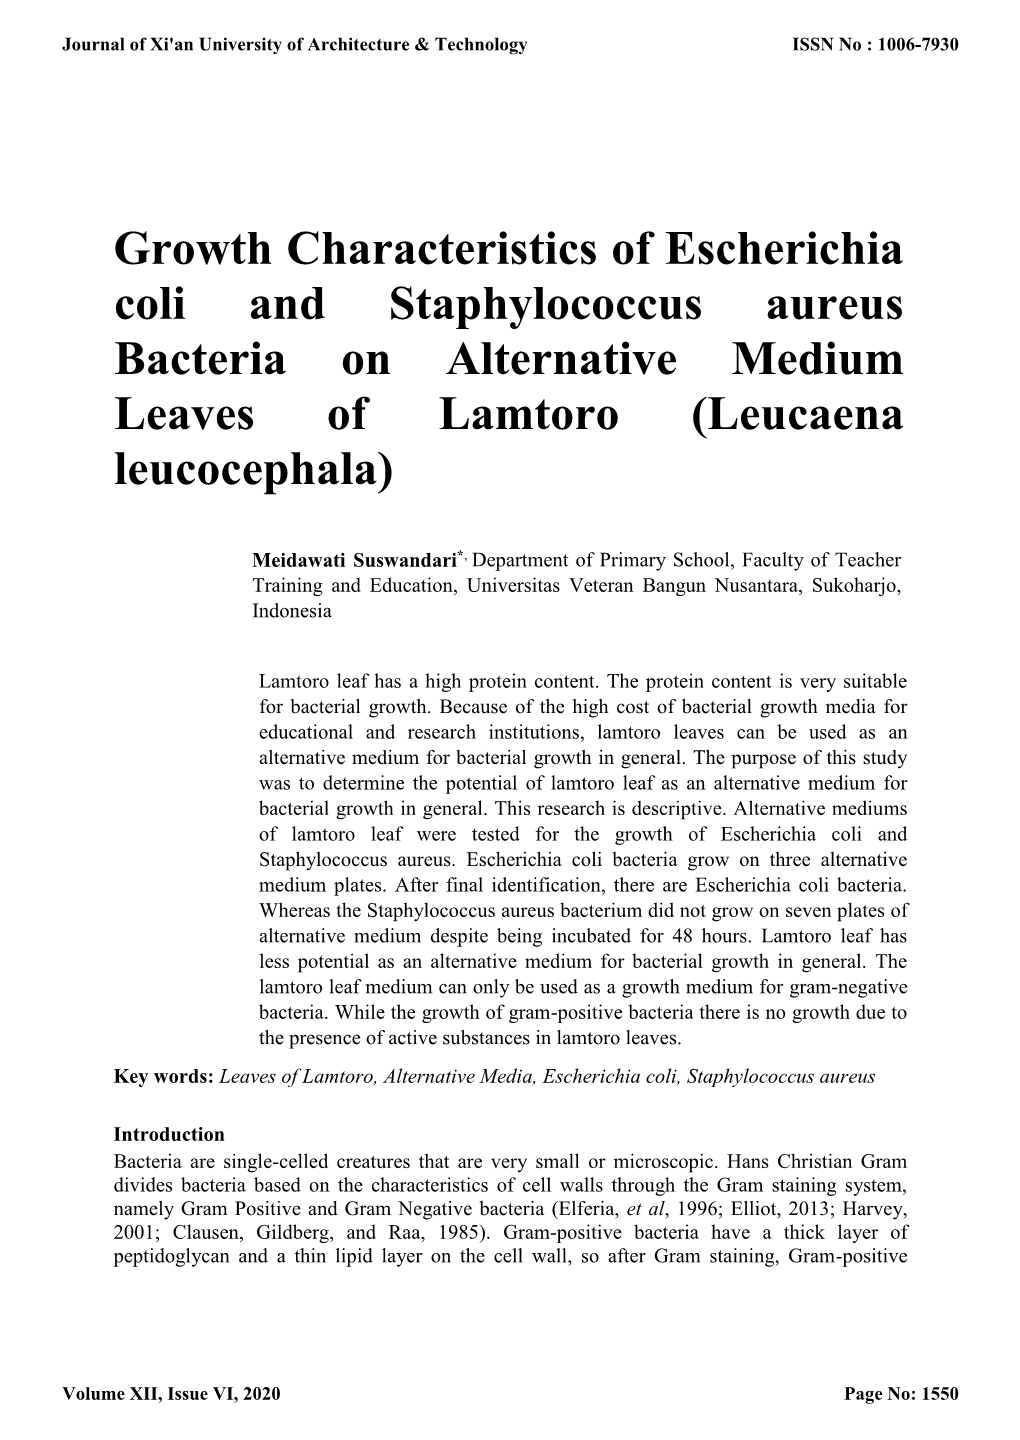 Growth Characteristics of Escherichia Coli and Staphylococcus Aureus Bacteria on Alternative Medium Leaves of Lamtoro (Leucaena Leucocephala)